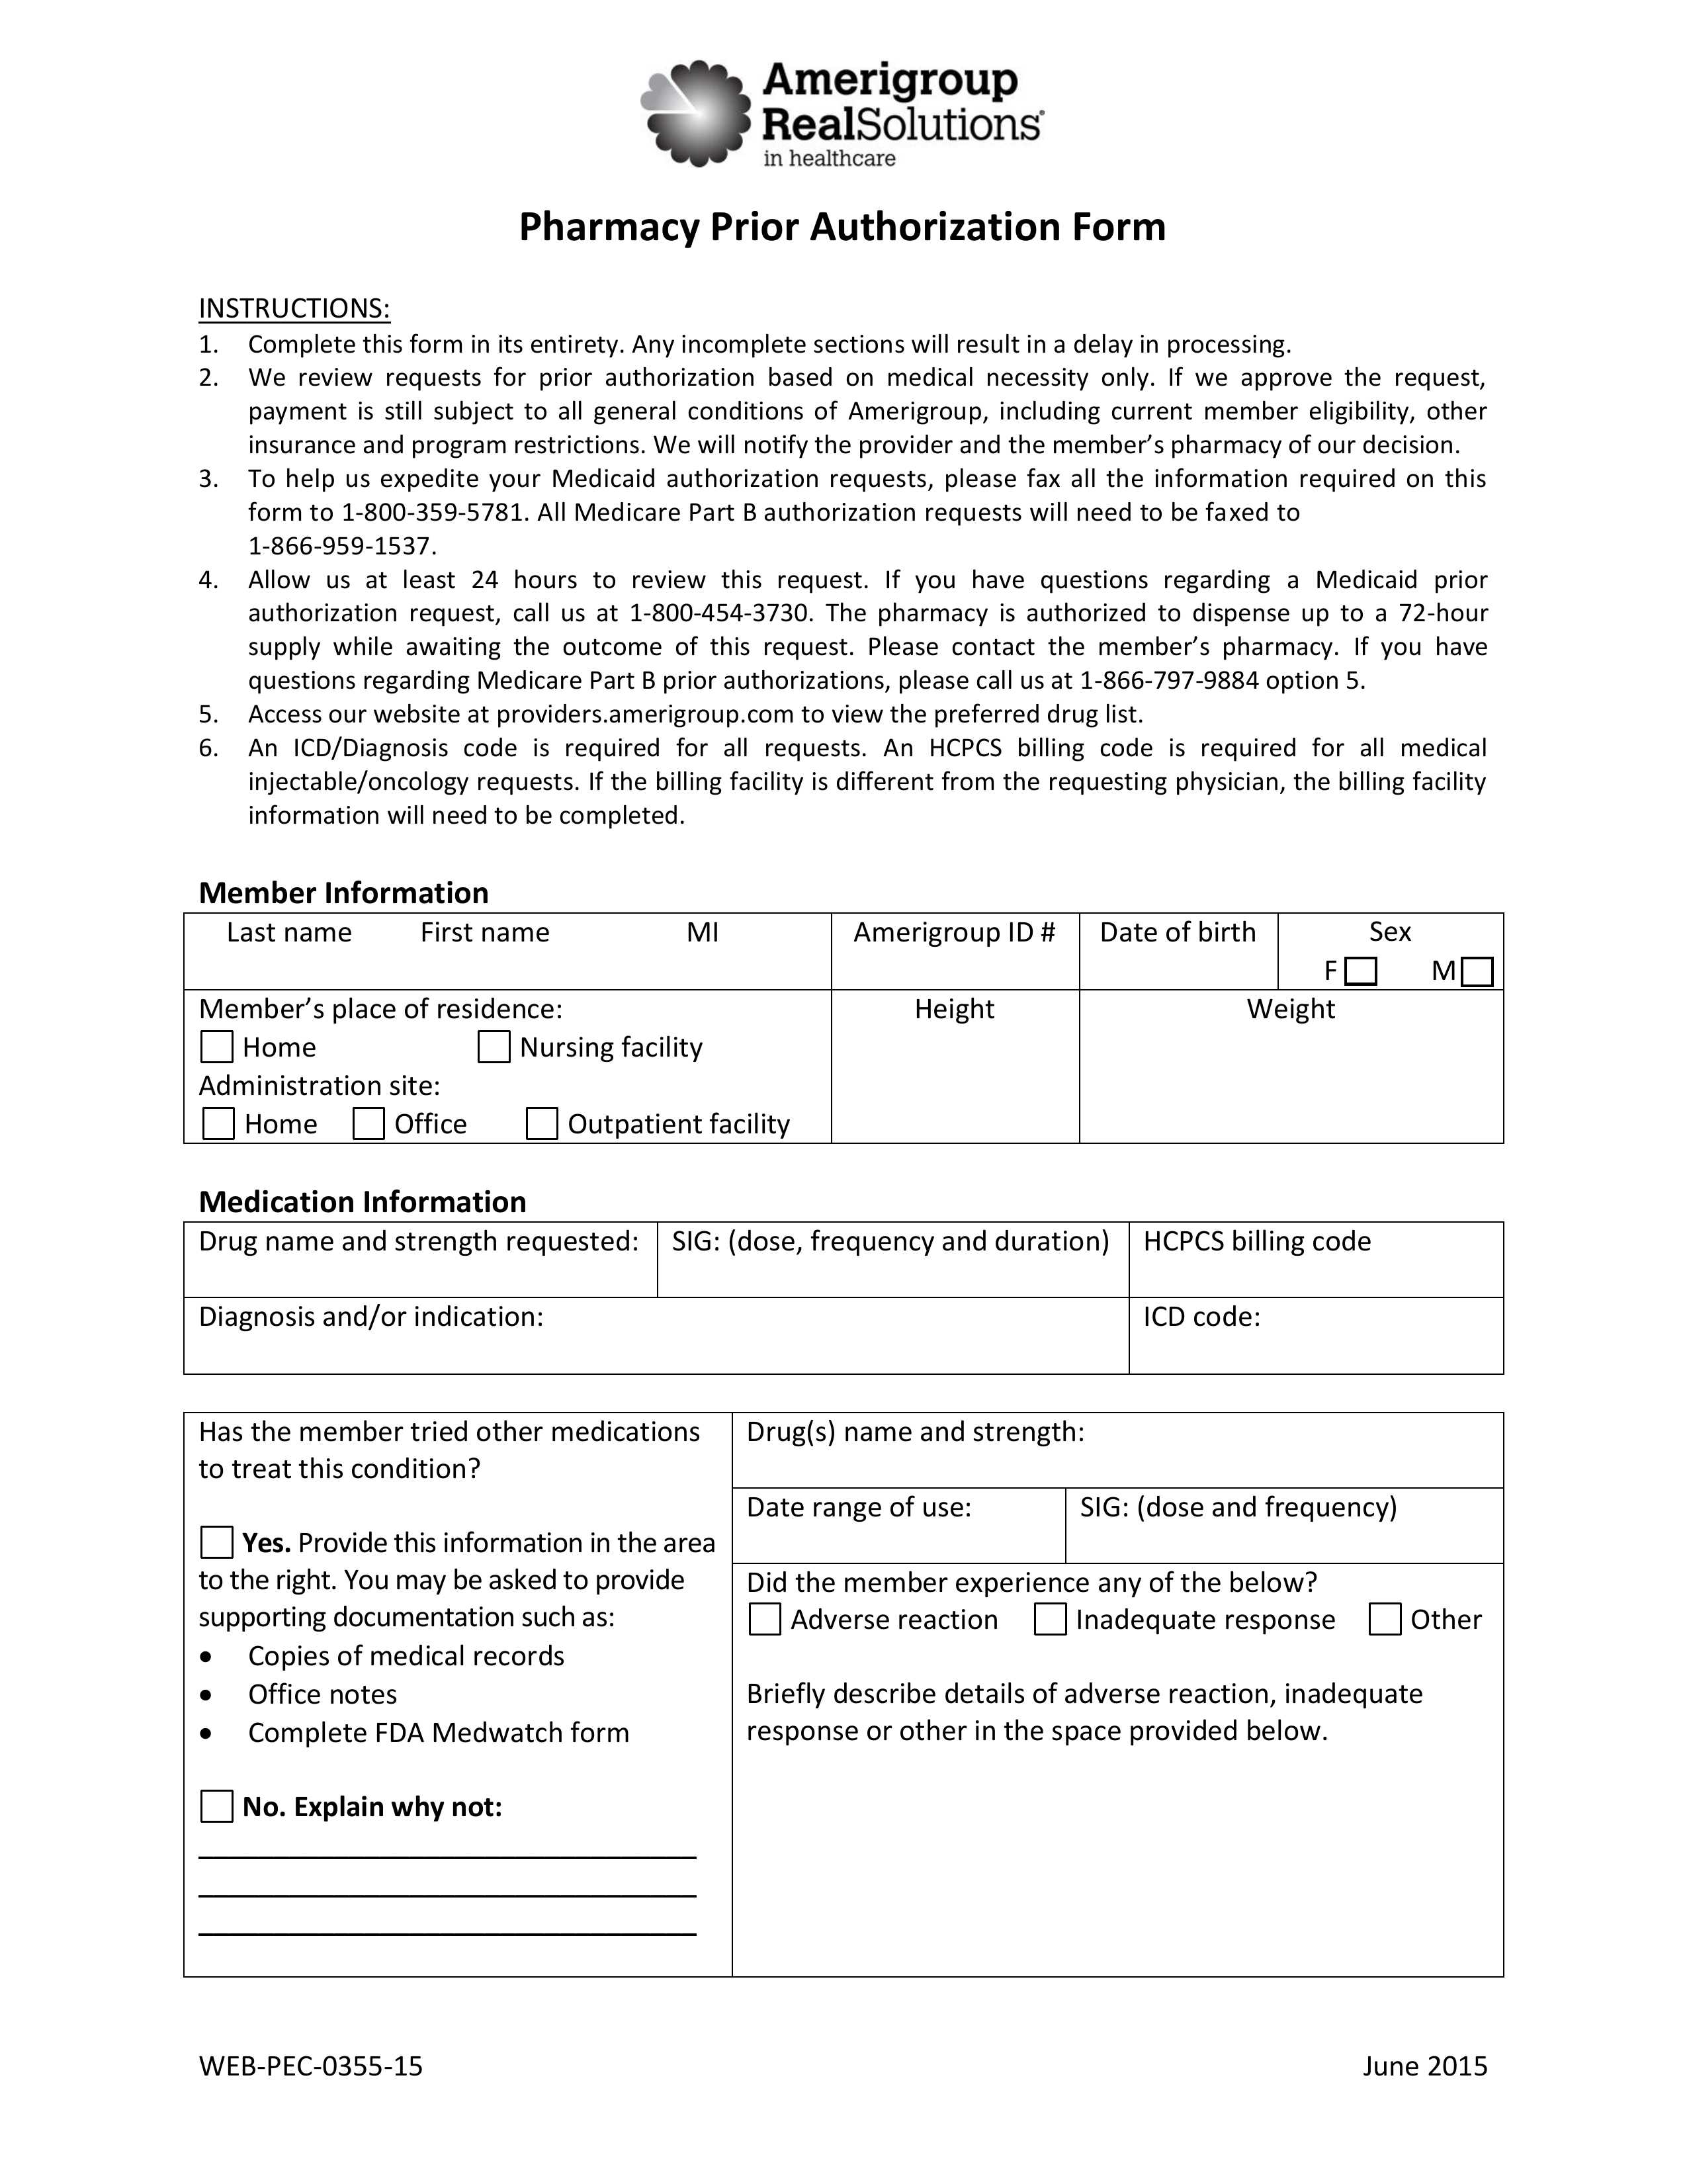 Amerigroup Prior (Rx) Authorization Form